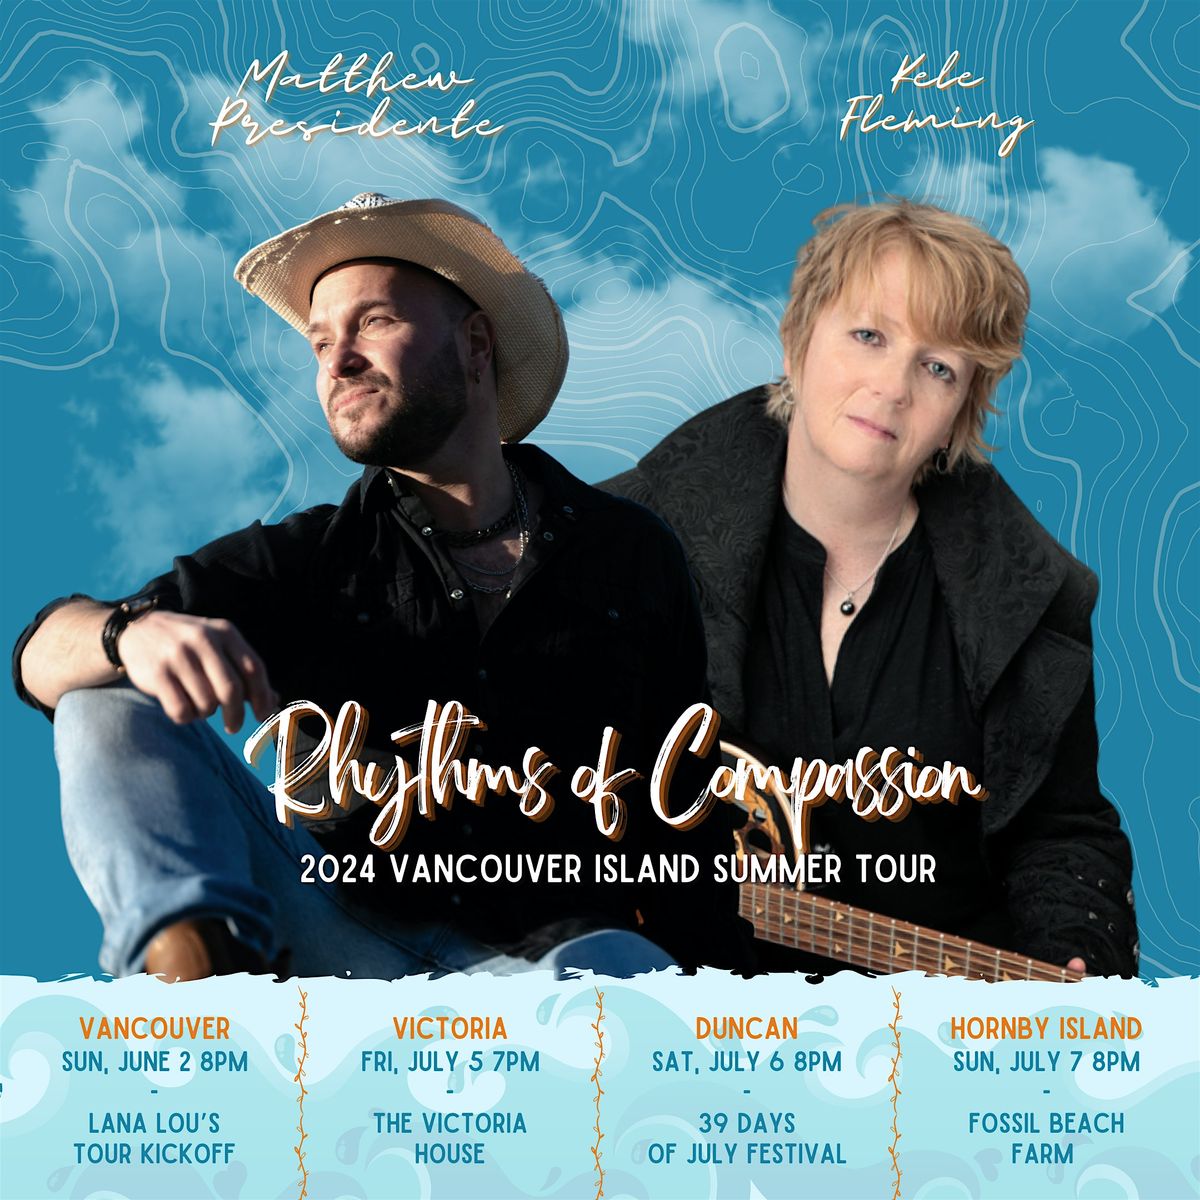 Rhythms of Compassion - Vancouver - Matthew Presidente & Kele Fleming